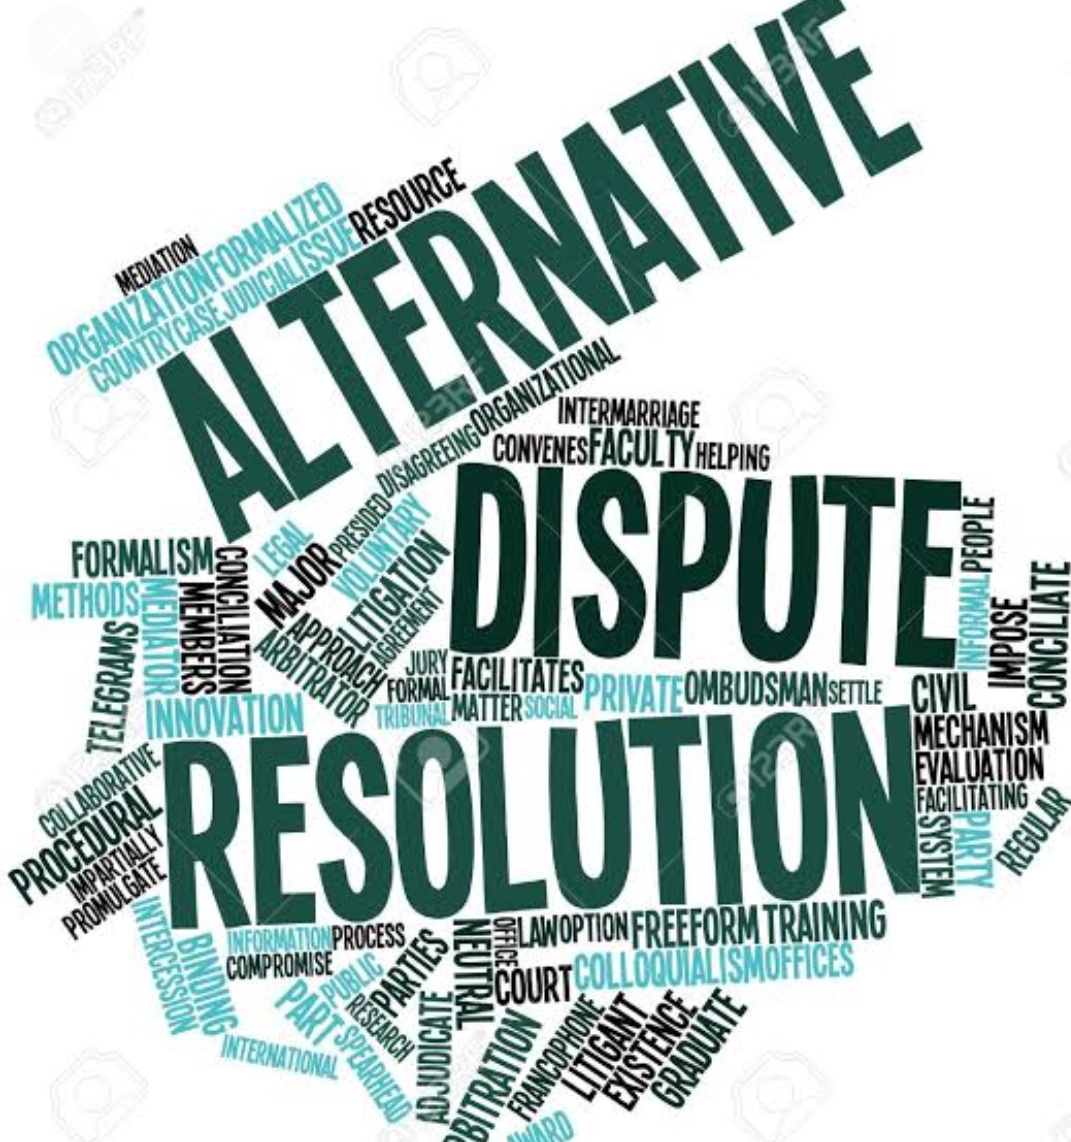 Advantages of Alternative Dispute Resolution Methods